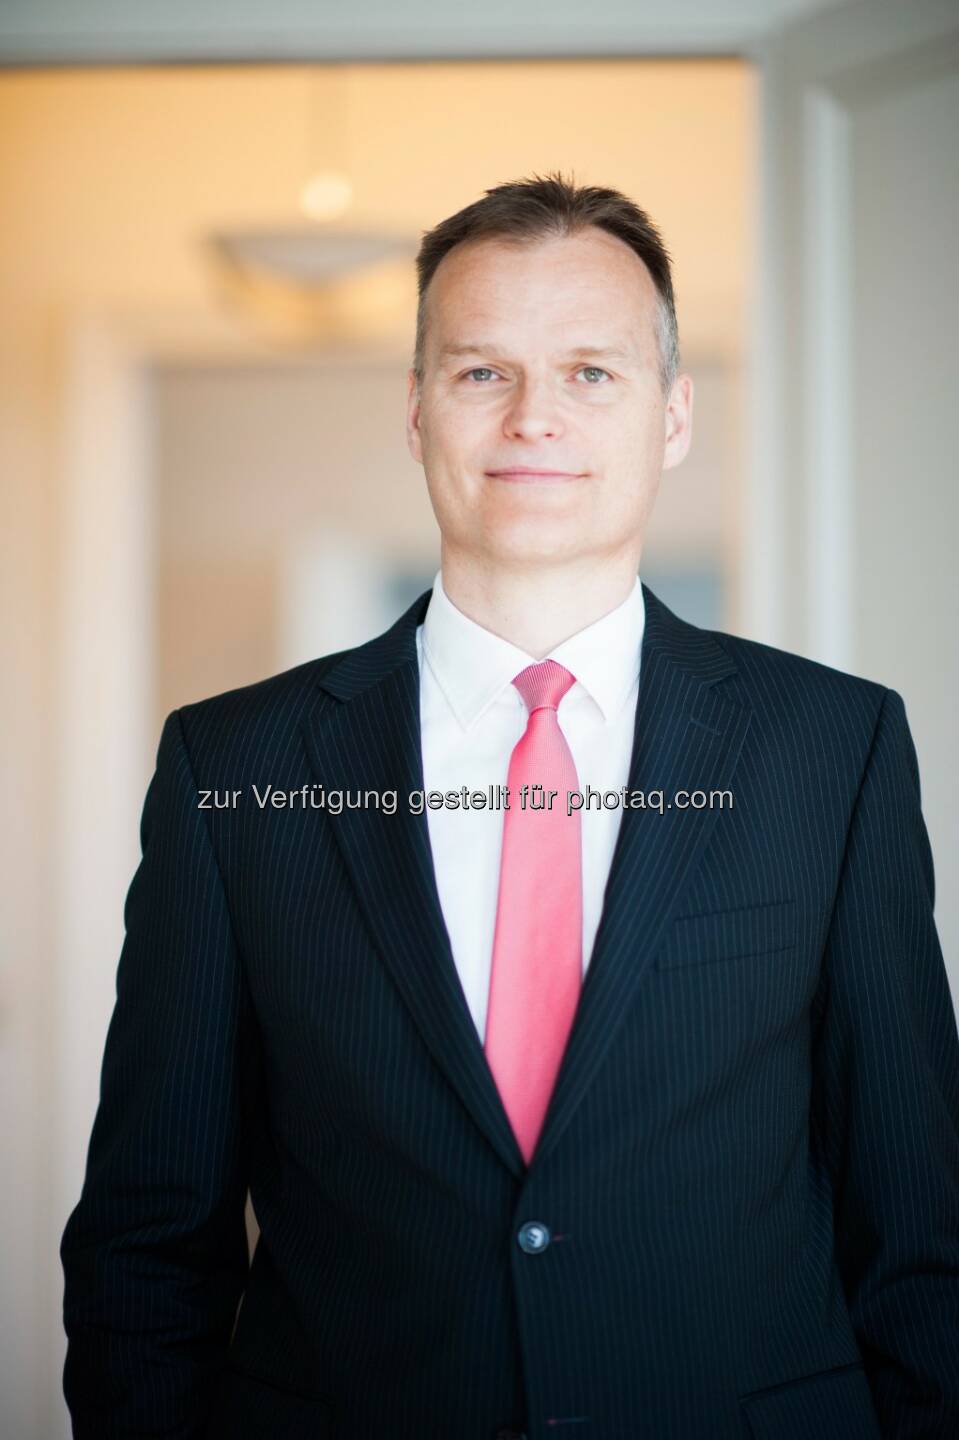 Martin Hehemann, neuer Managing Partner bei Metrum Communications.

